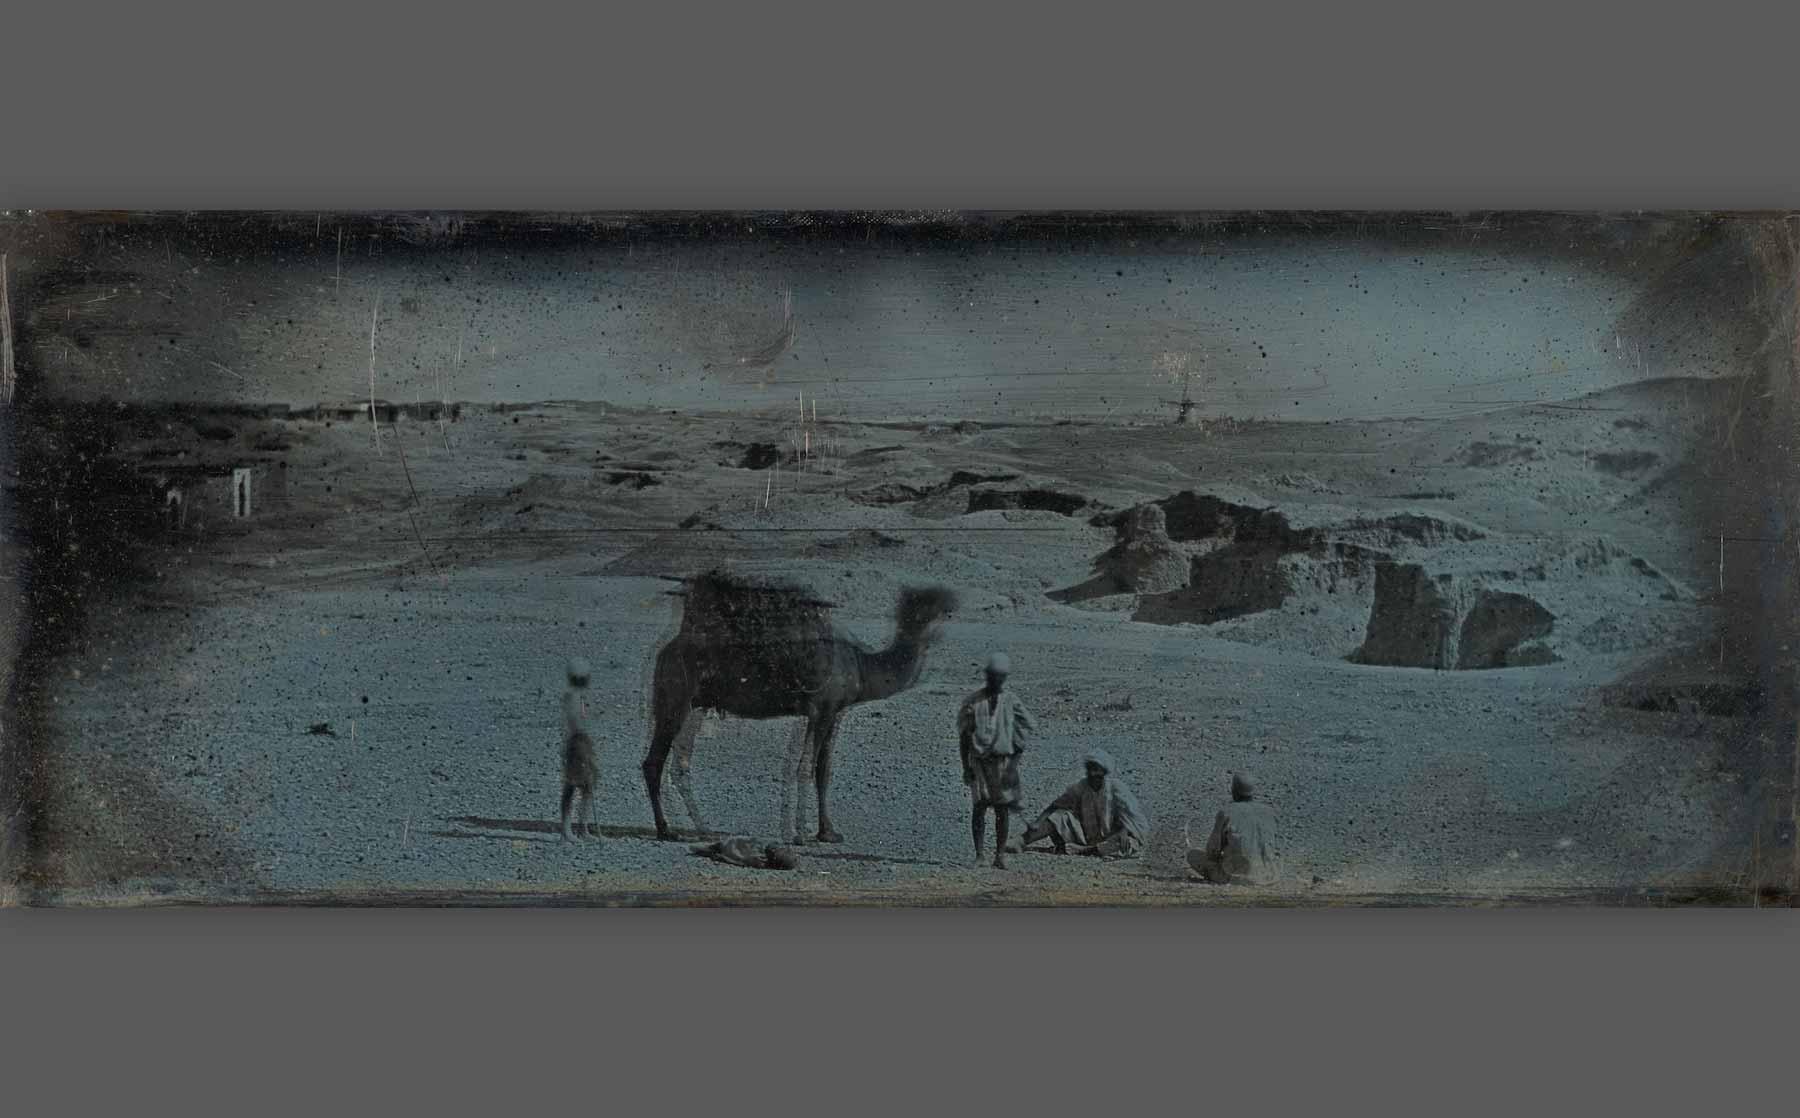 Girault de Prangey, “Desert near Alexandria” (1842), daguerreotype.